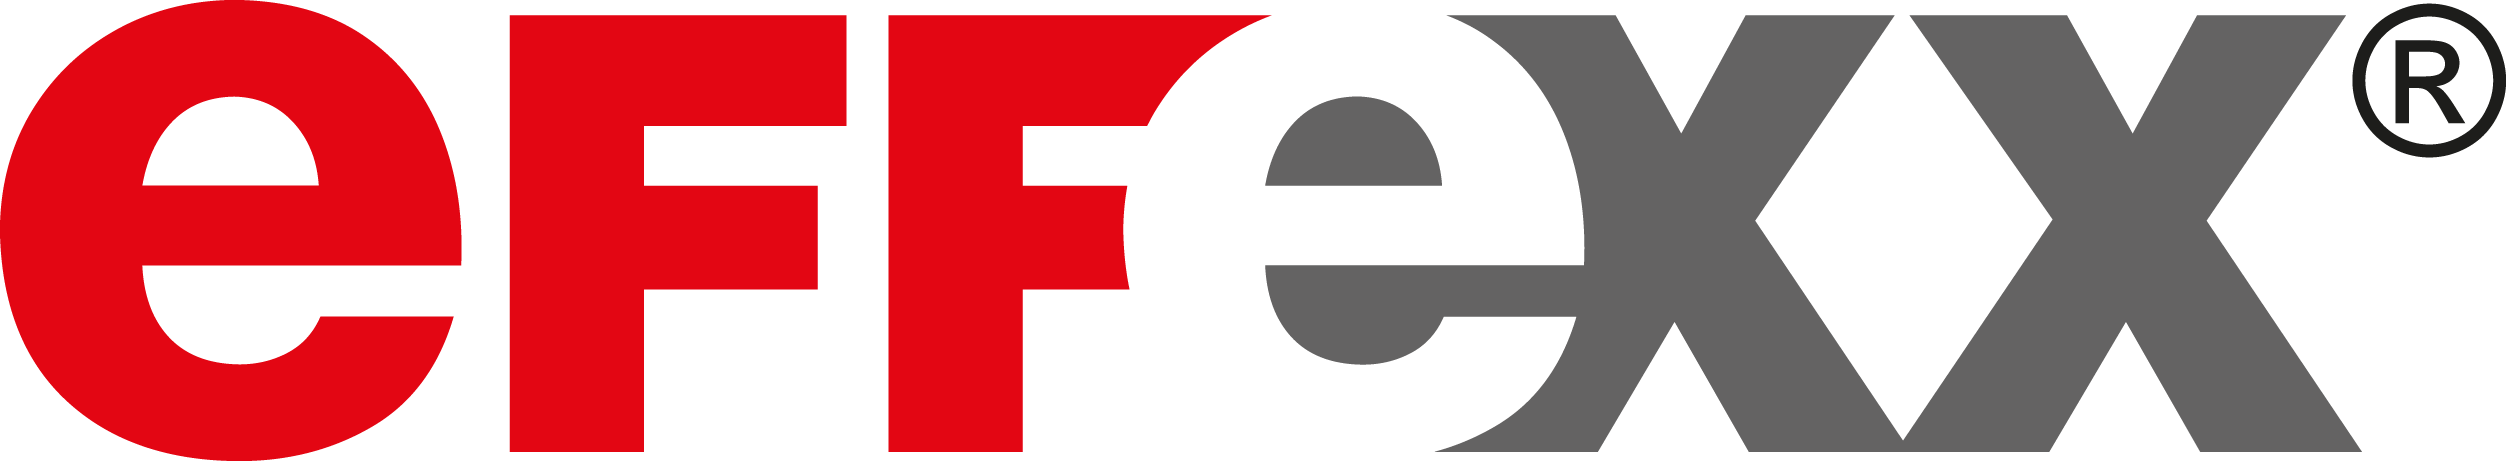 effexx Berlin GmbH